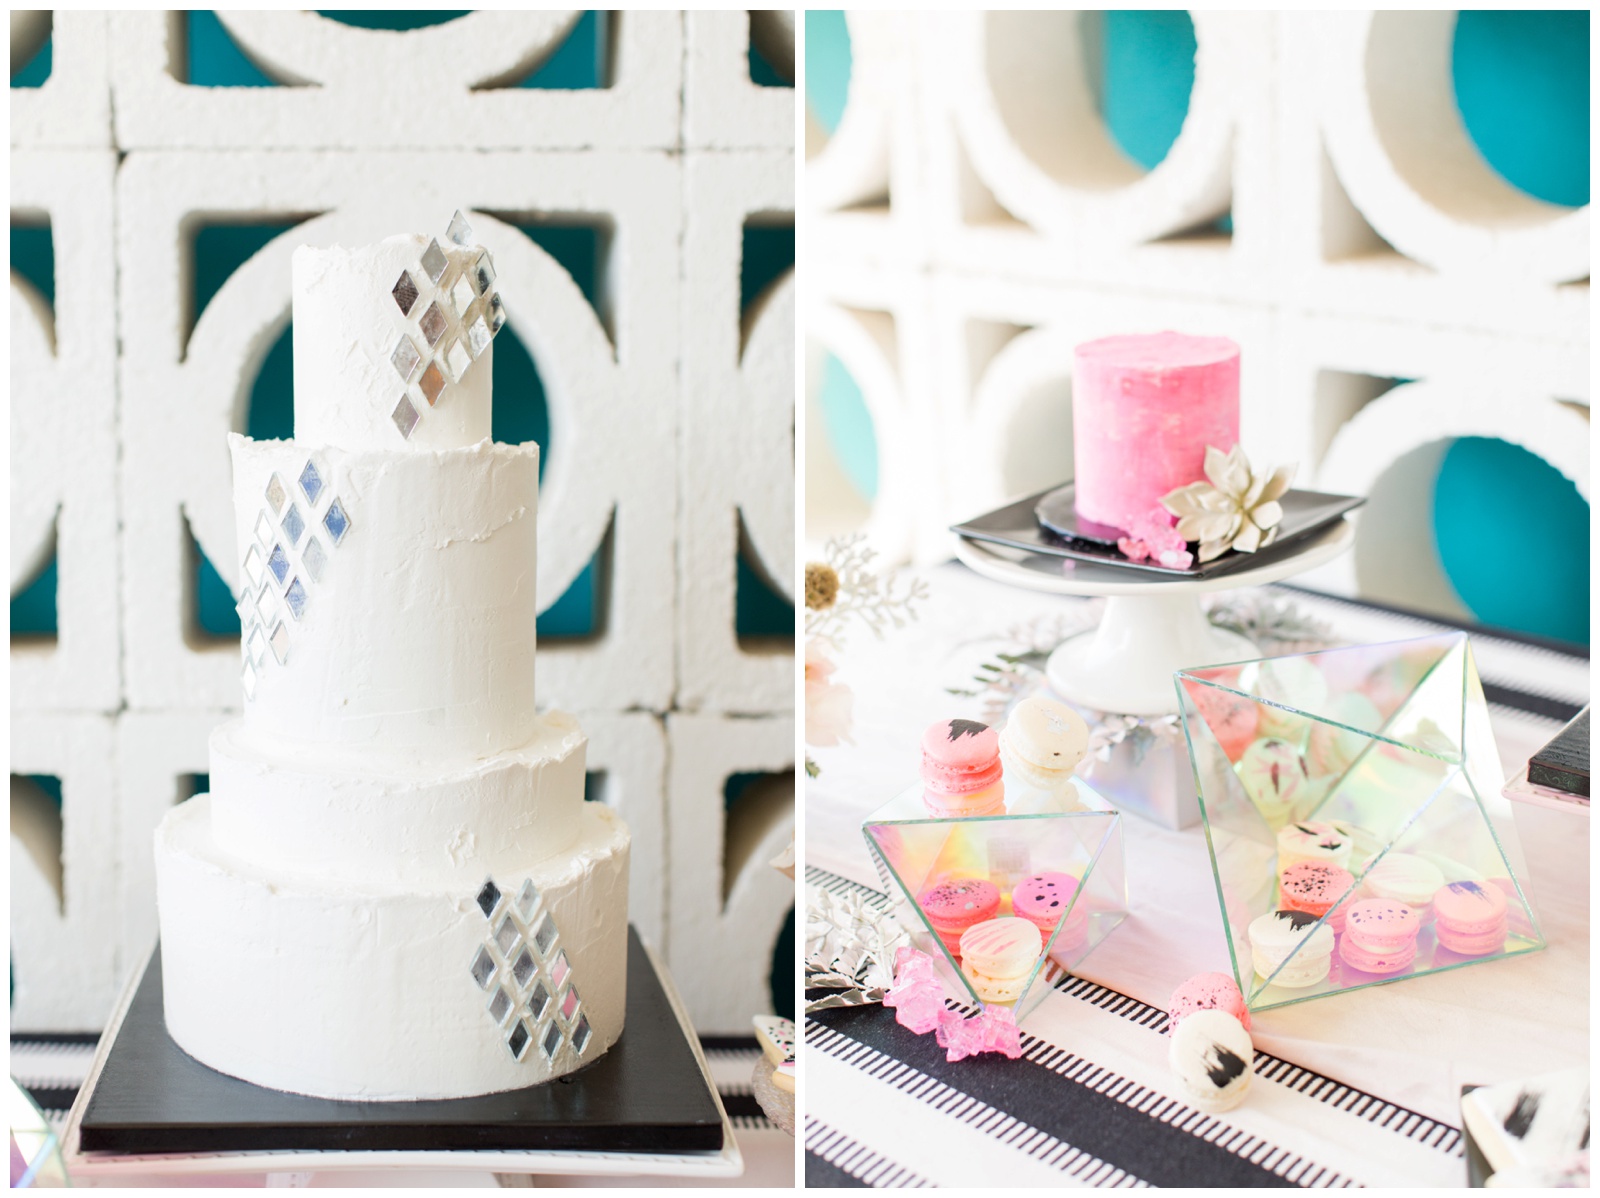 Artistic style wedding cakes in Arizona - Riane Roberts Photography